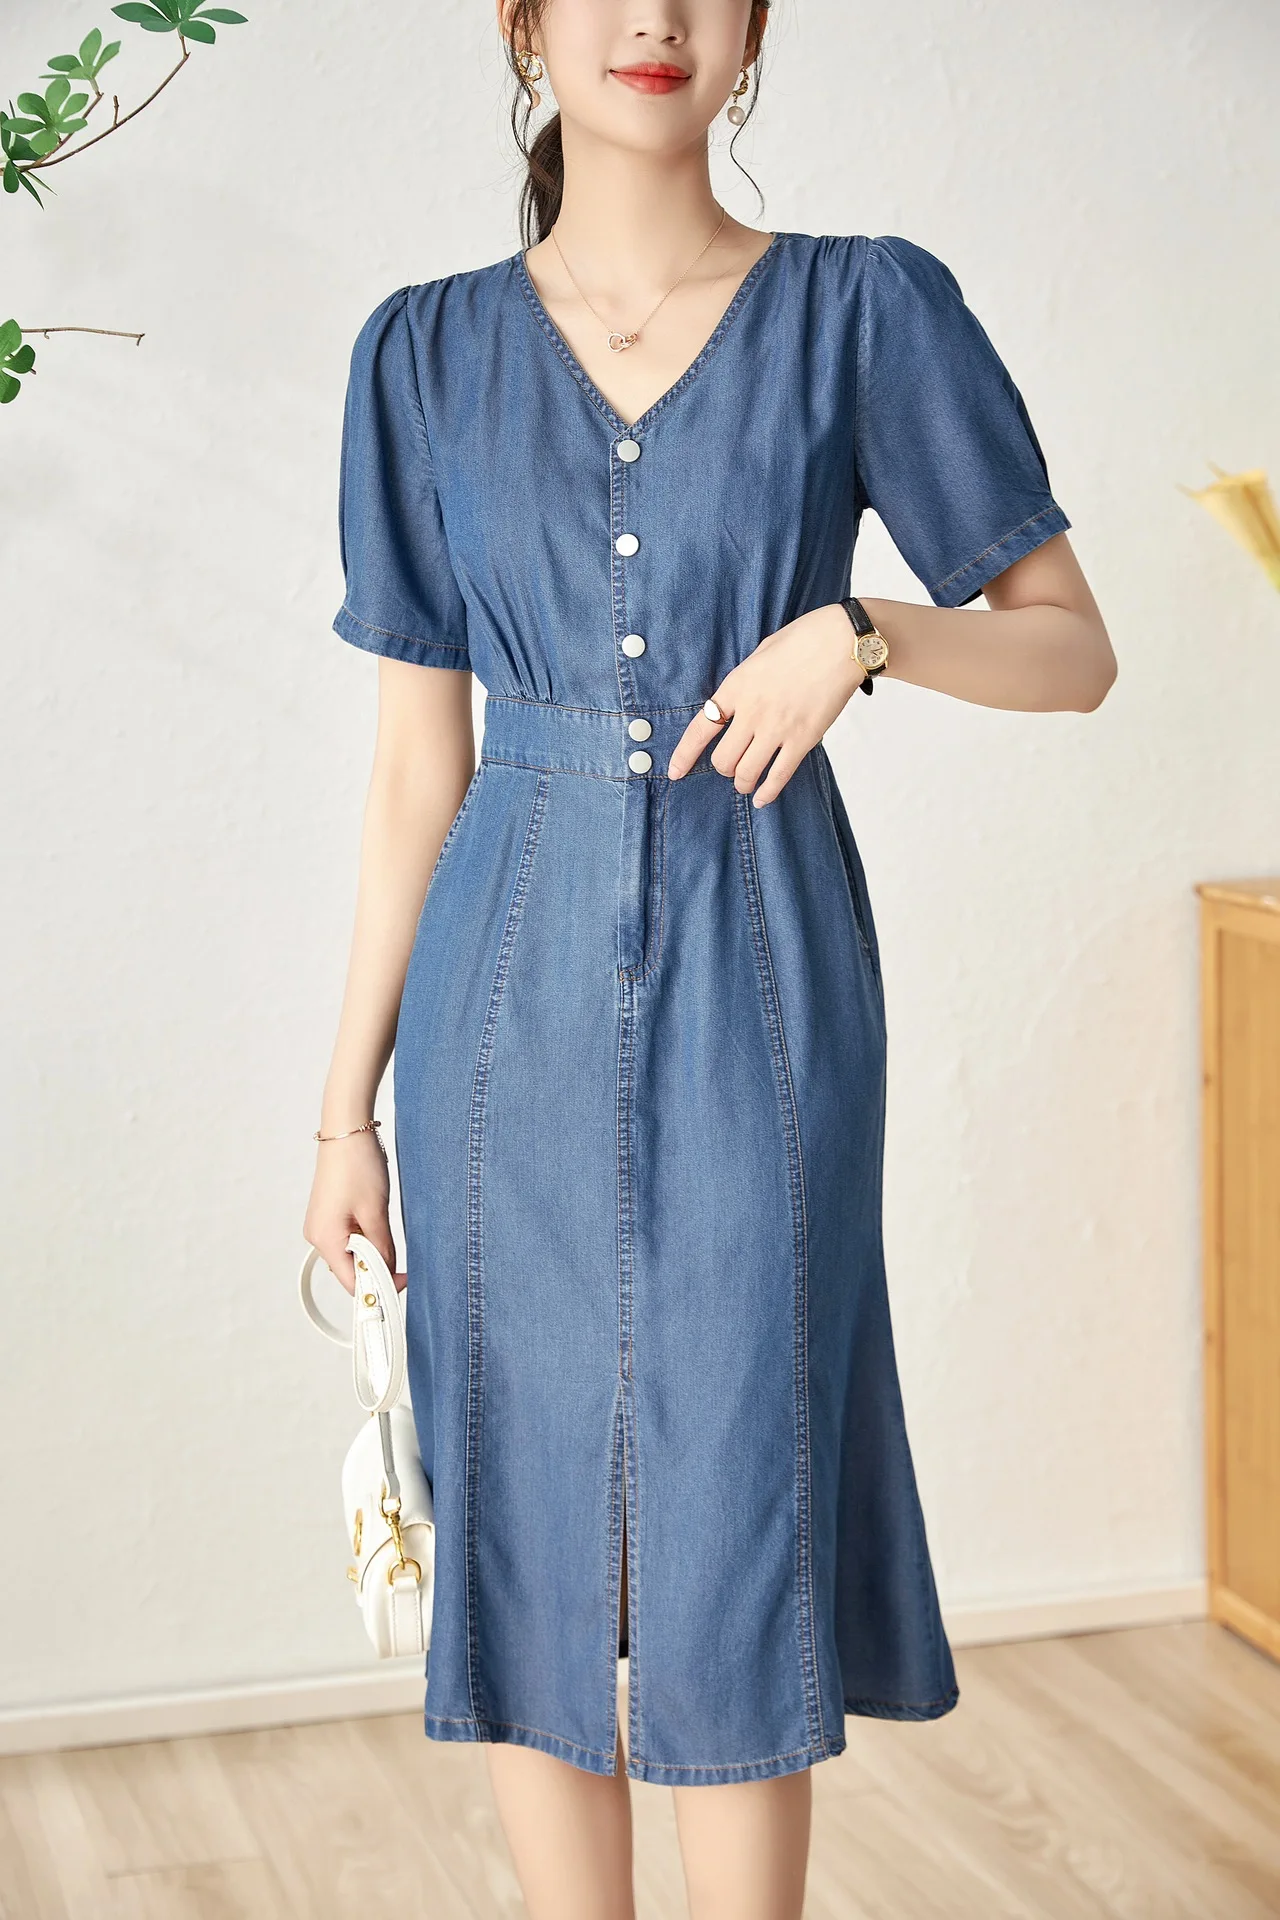 New women's clothing for spring and summer 2023 Blue Denim Smocking Waist Slit Hemline at Hem Dress 0430